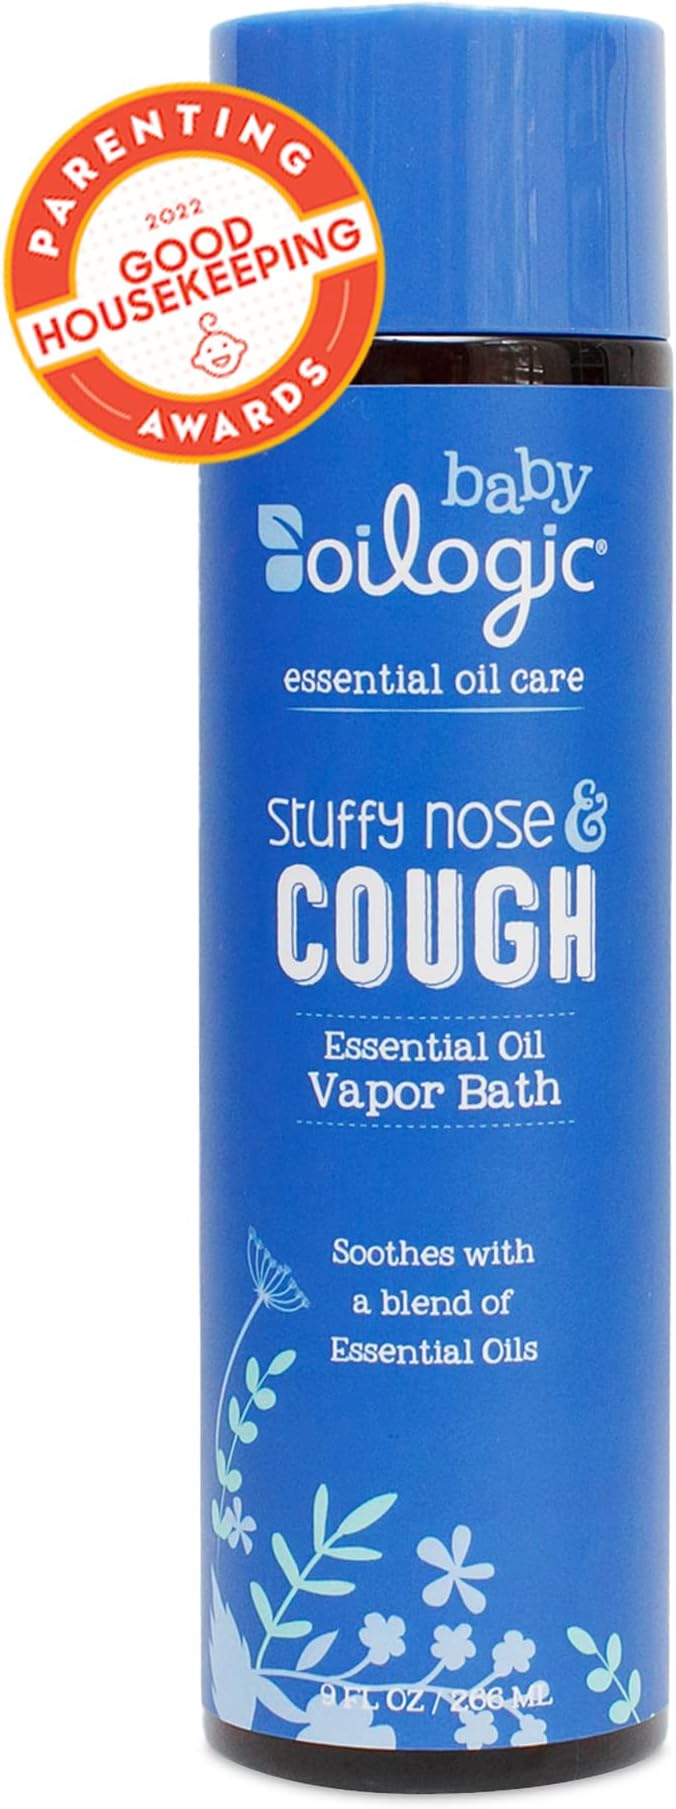 Oilogic Stuffy Nose and Cough Vapor Bath Relief - 266ml